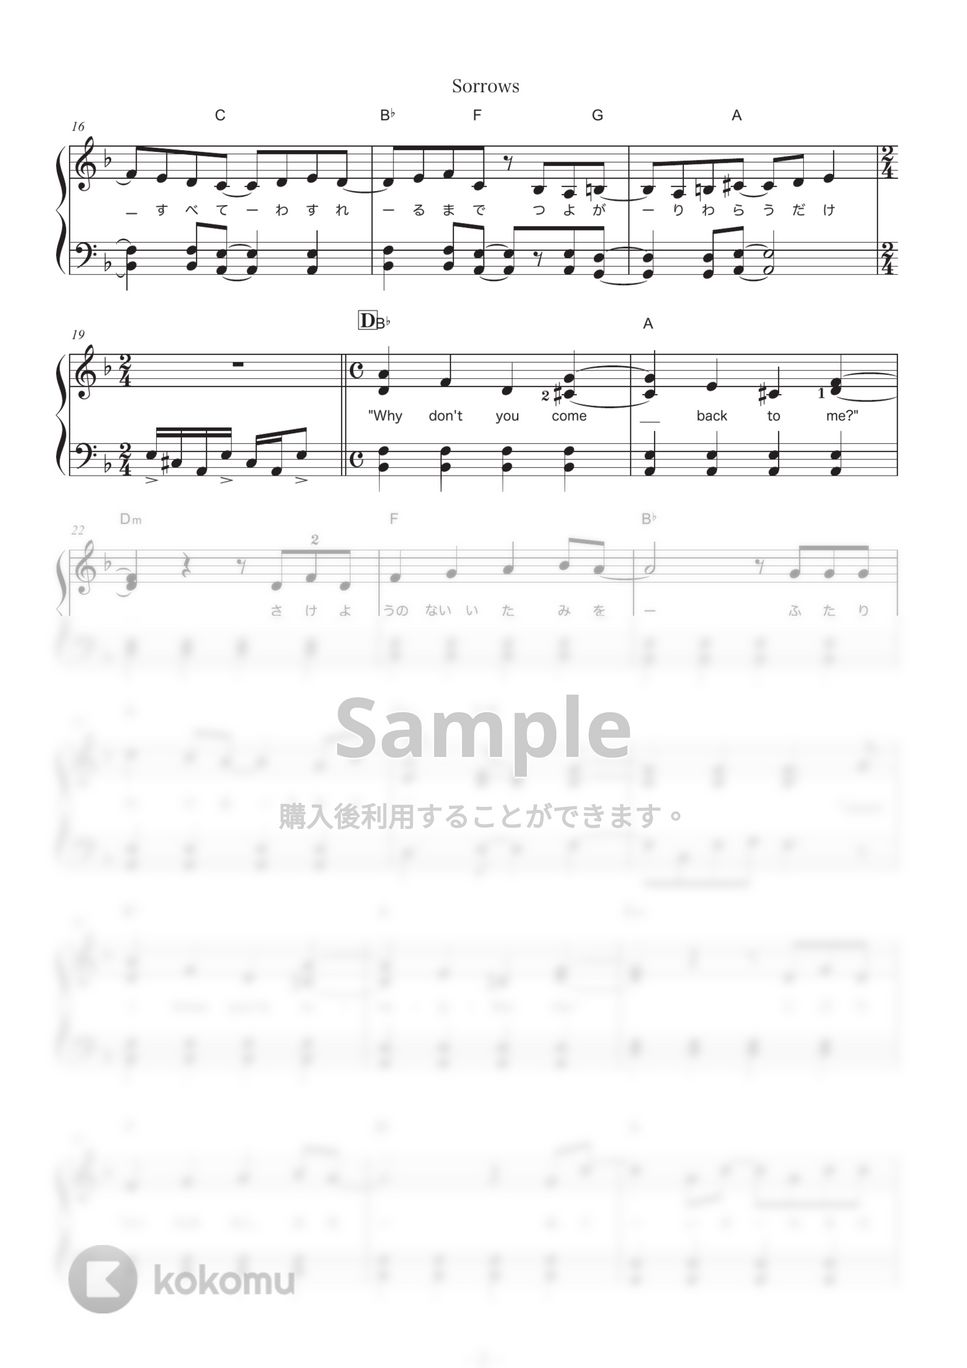 King Gnu - Sorrows (ピアノ初級／Short／歌詞・コード付) by OKANA